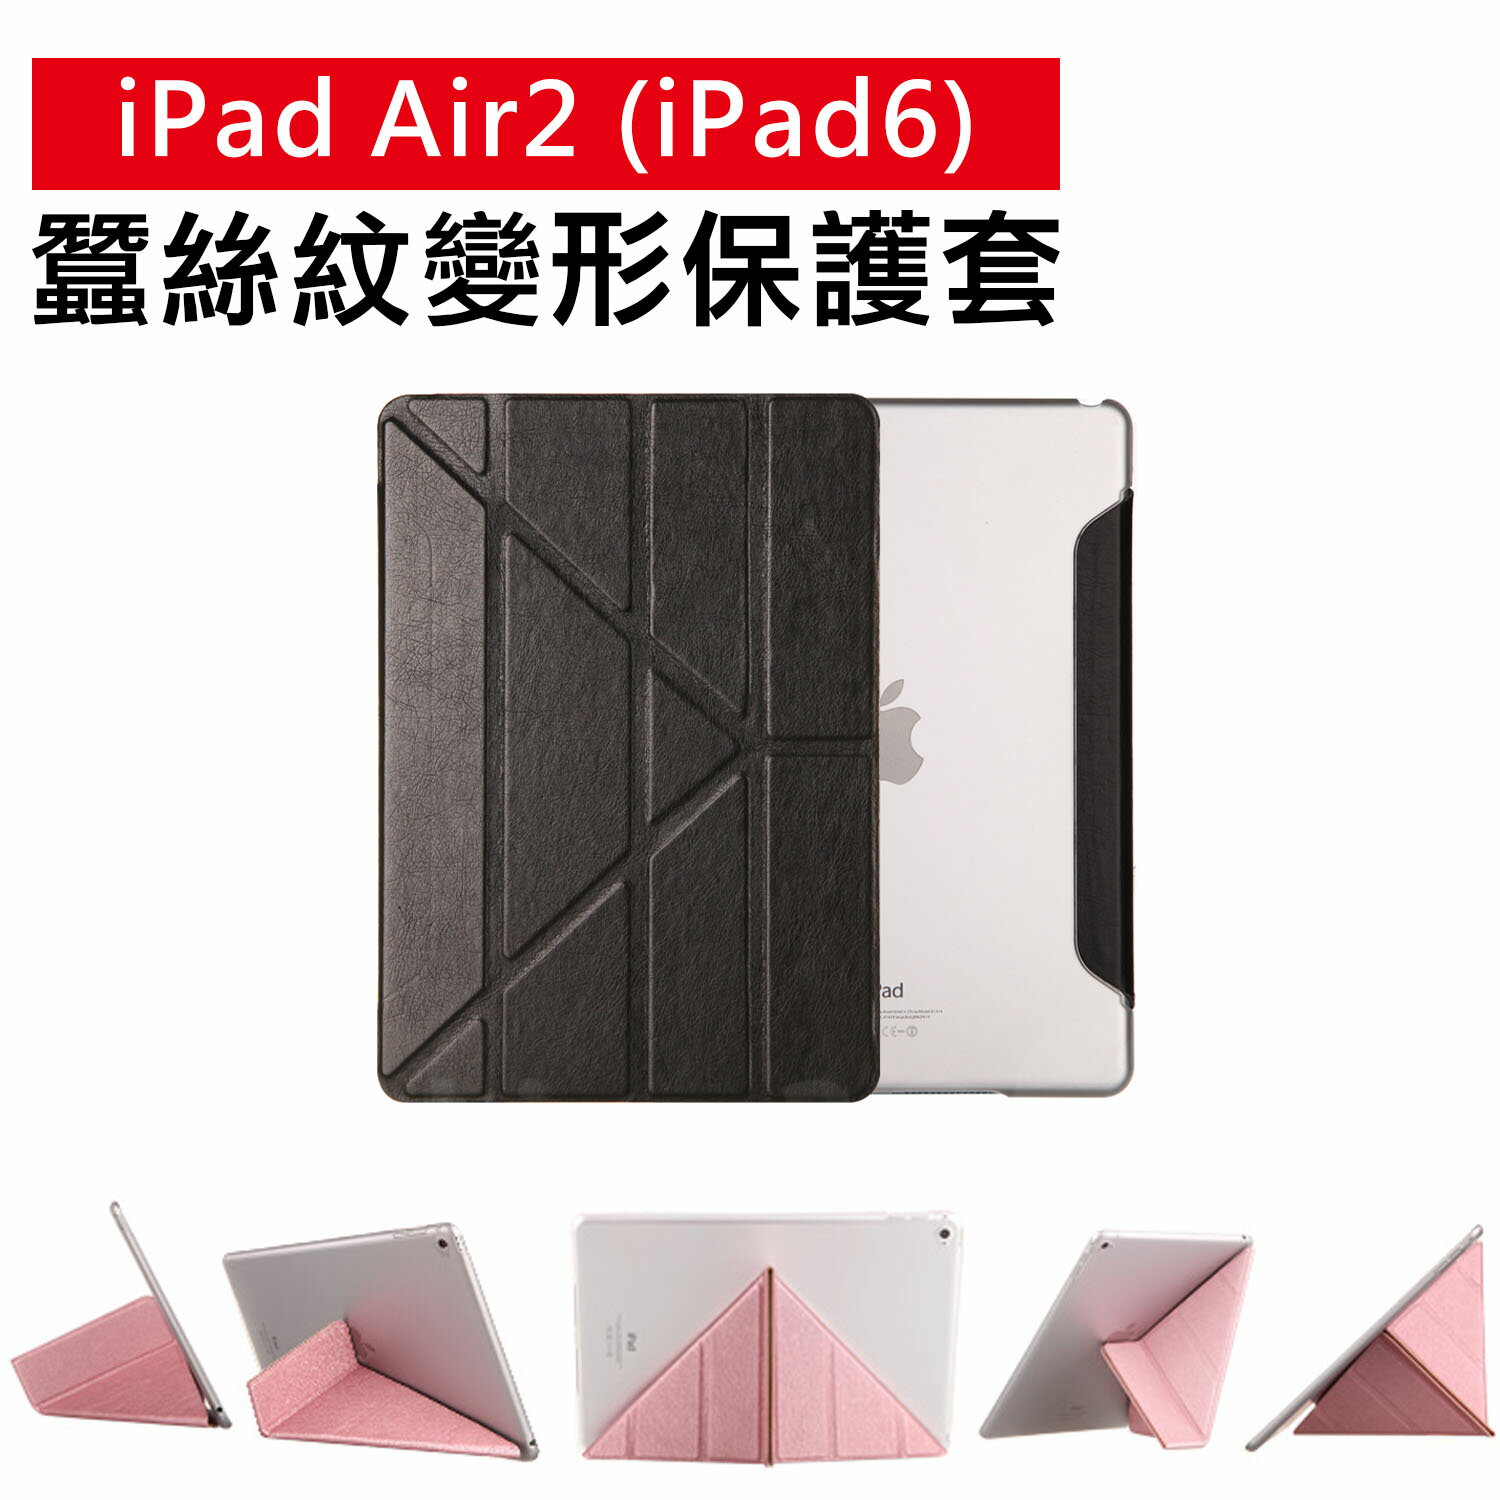  iPad Air 2 / iPad 6 專用 蠶絲紋 變形金剛皮套 【C-APL-P60】 多角度摺疊保護套 立架式皮套 Alice3C 好用嗎